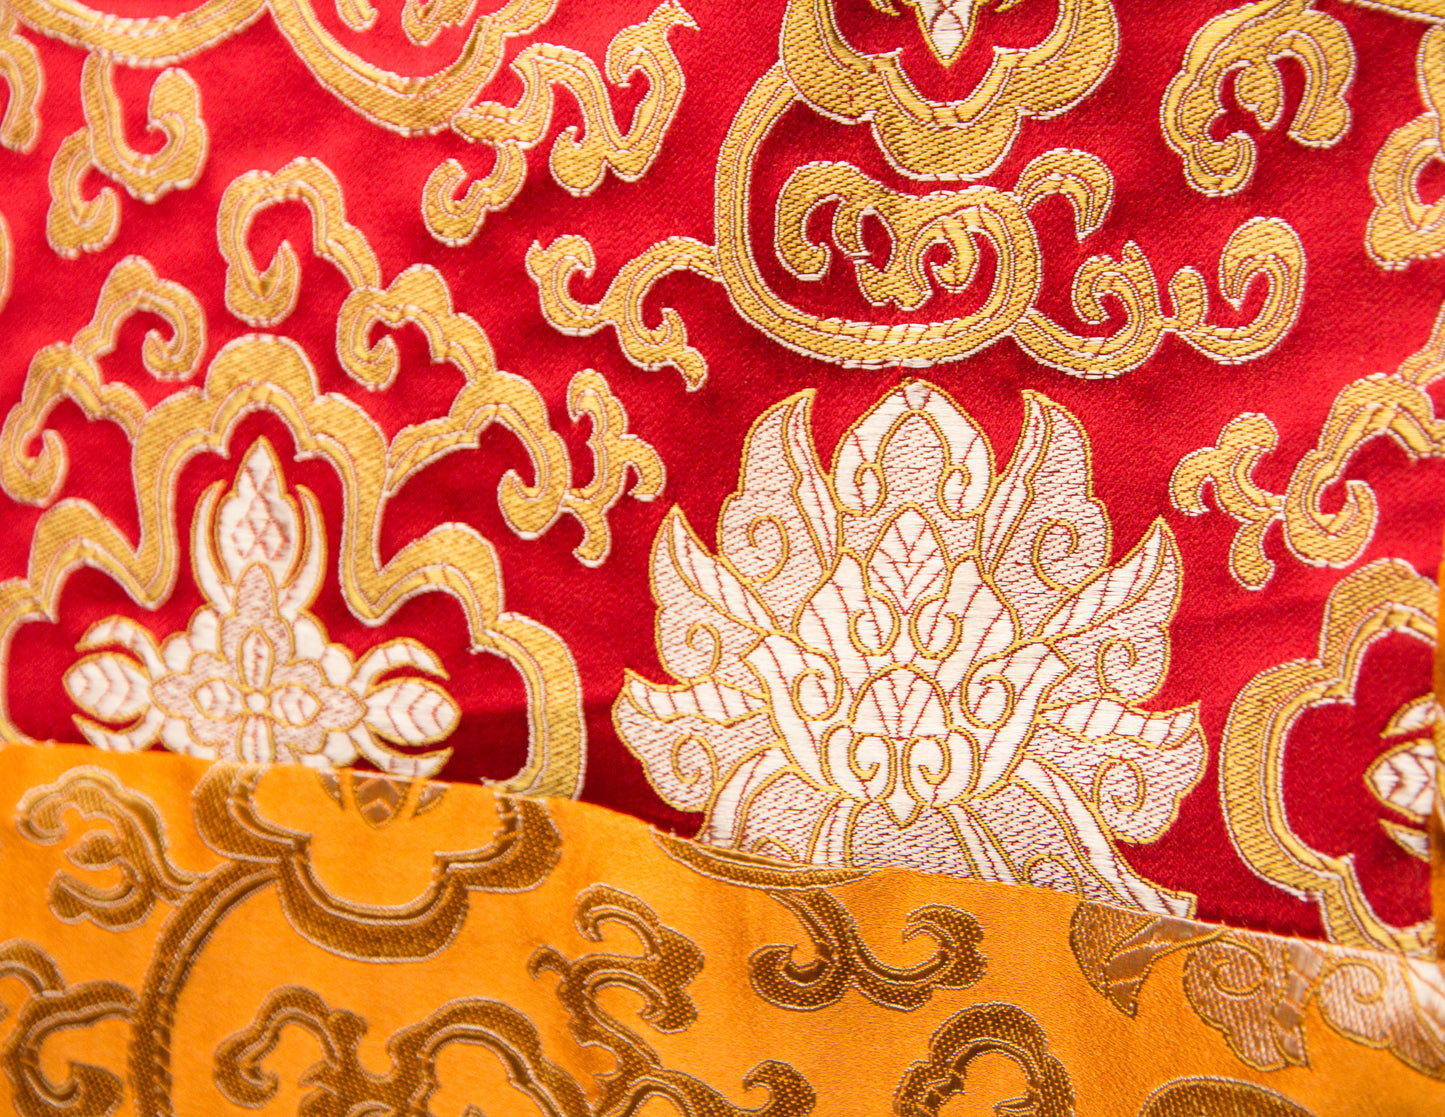 Square Brocade Cloth / Practice Table Cover – Orange & Red